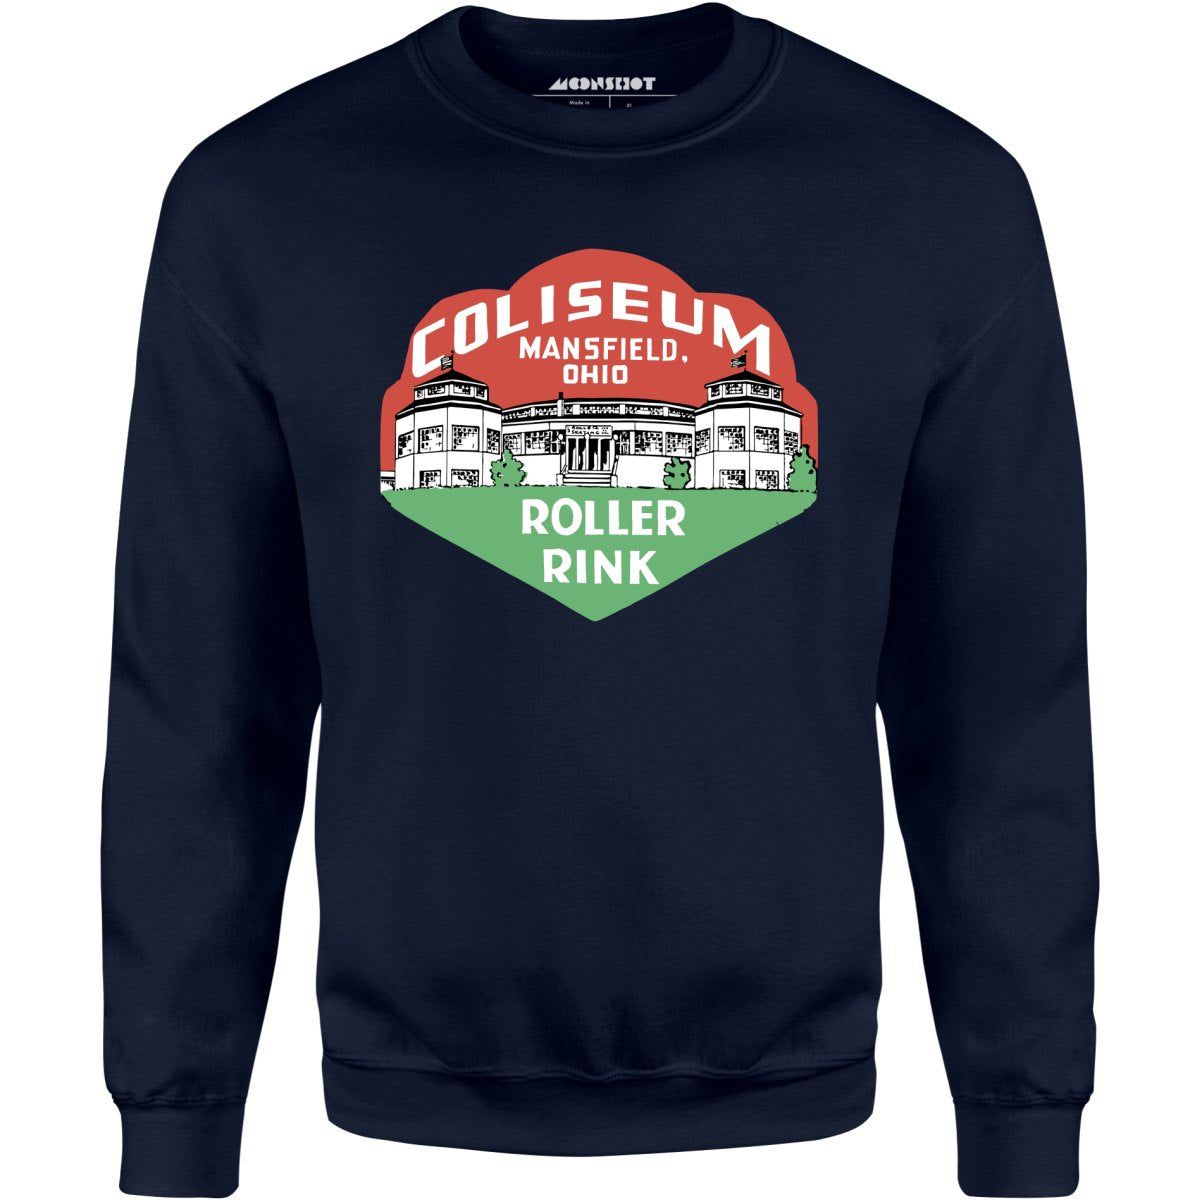 Coliseum - Mansfield, OH - Vintage Roller Rink - Unisex Sweatshirt